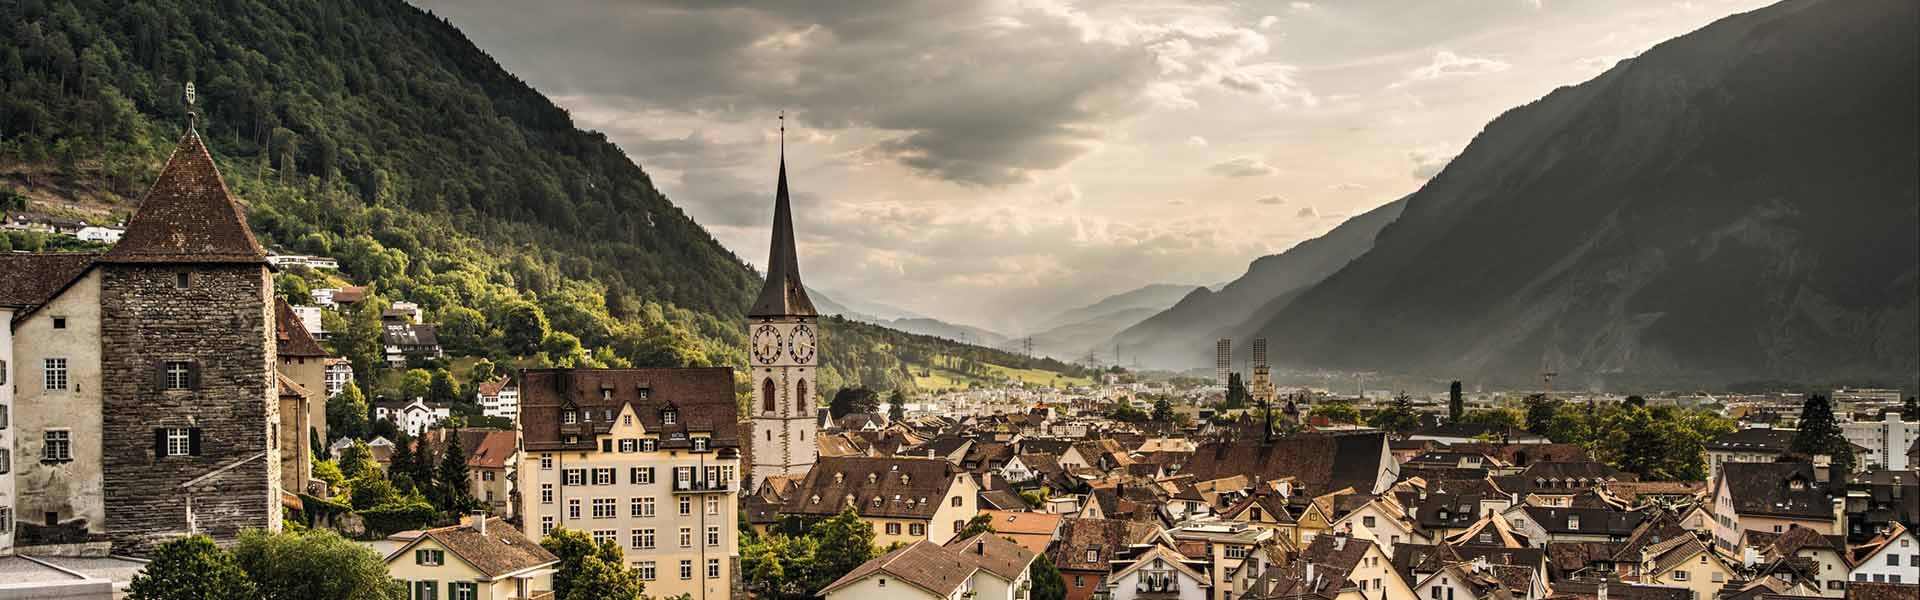 Top Escort Switzerland | Escort Chur